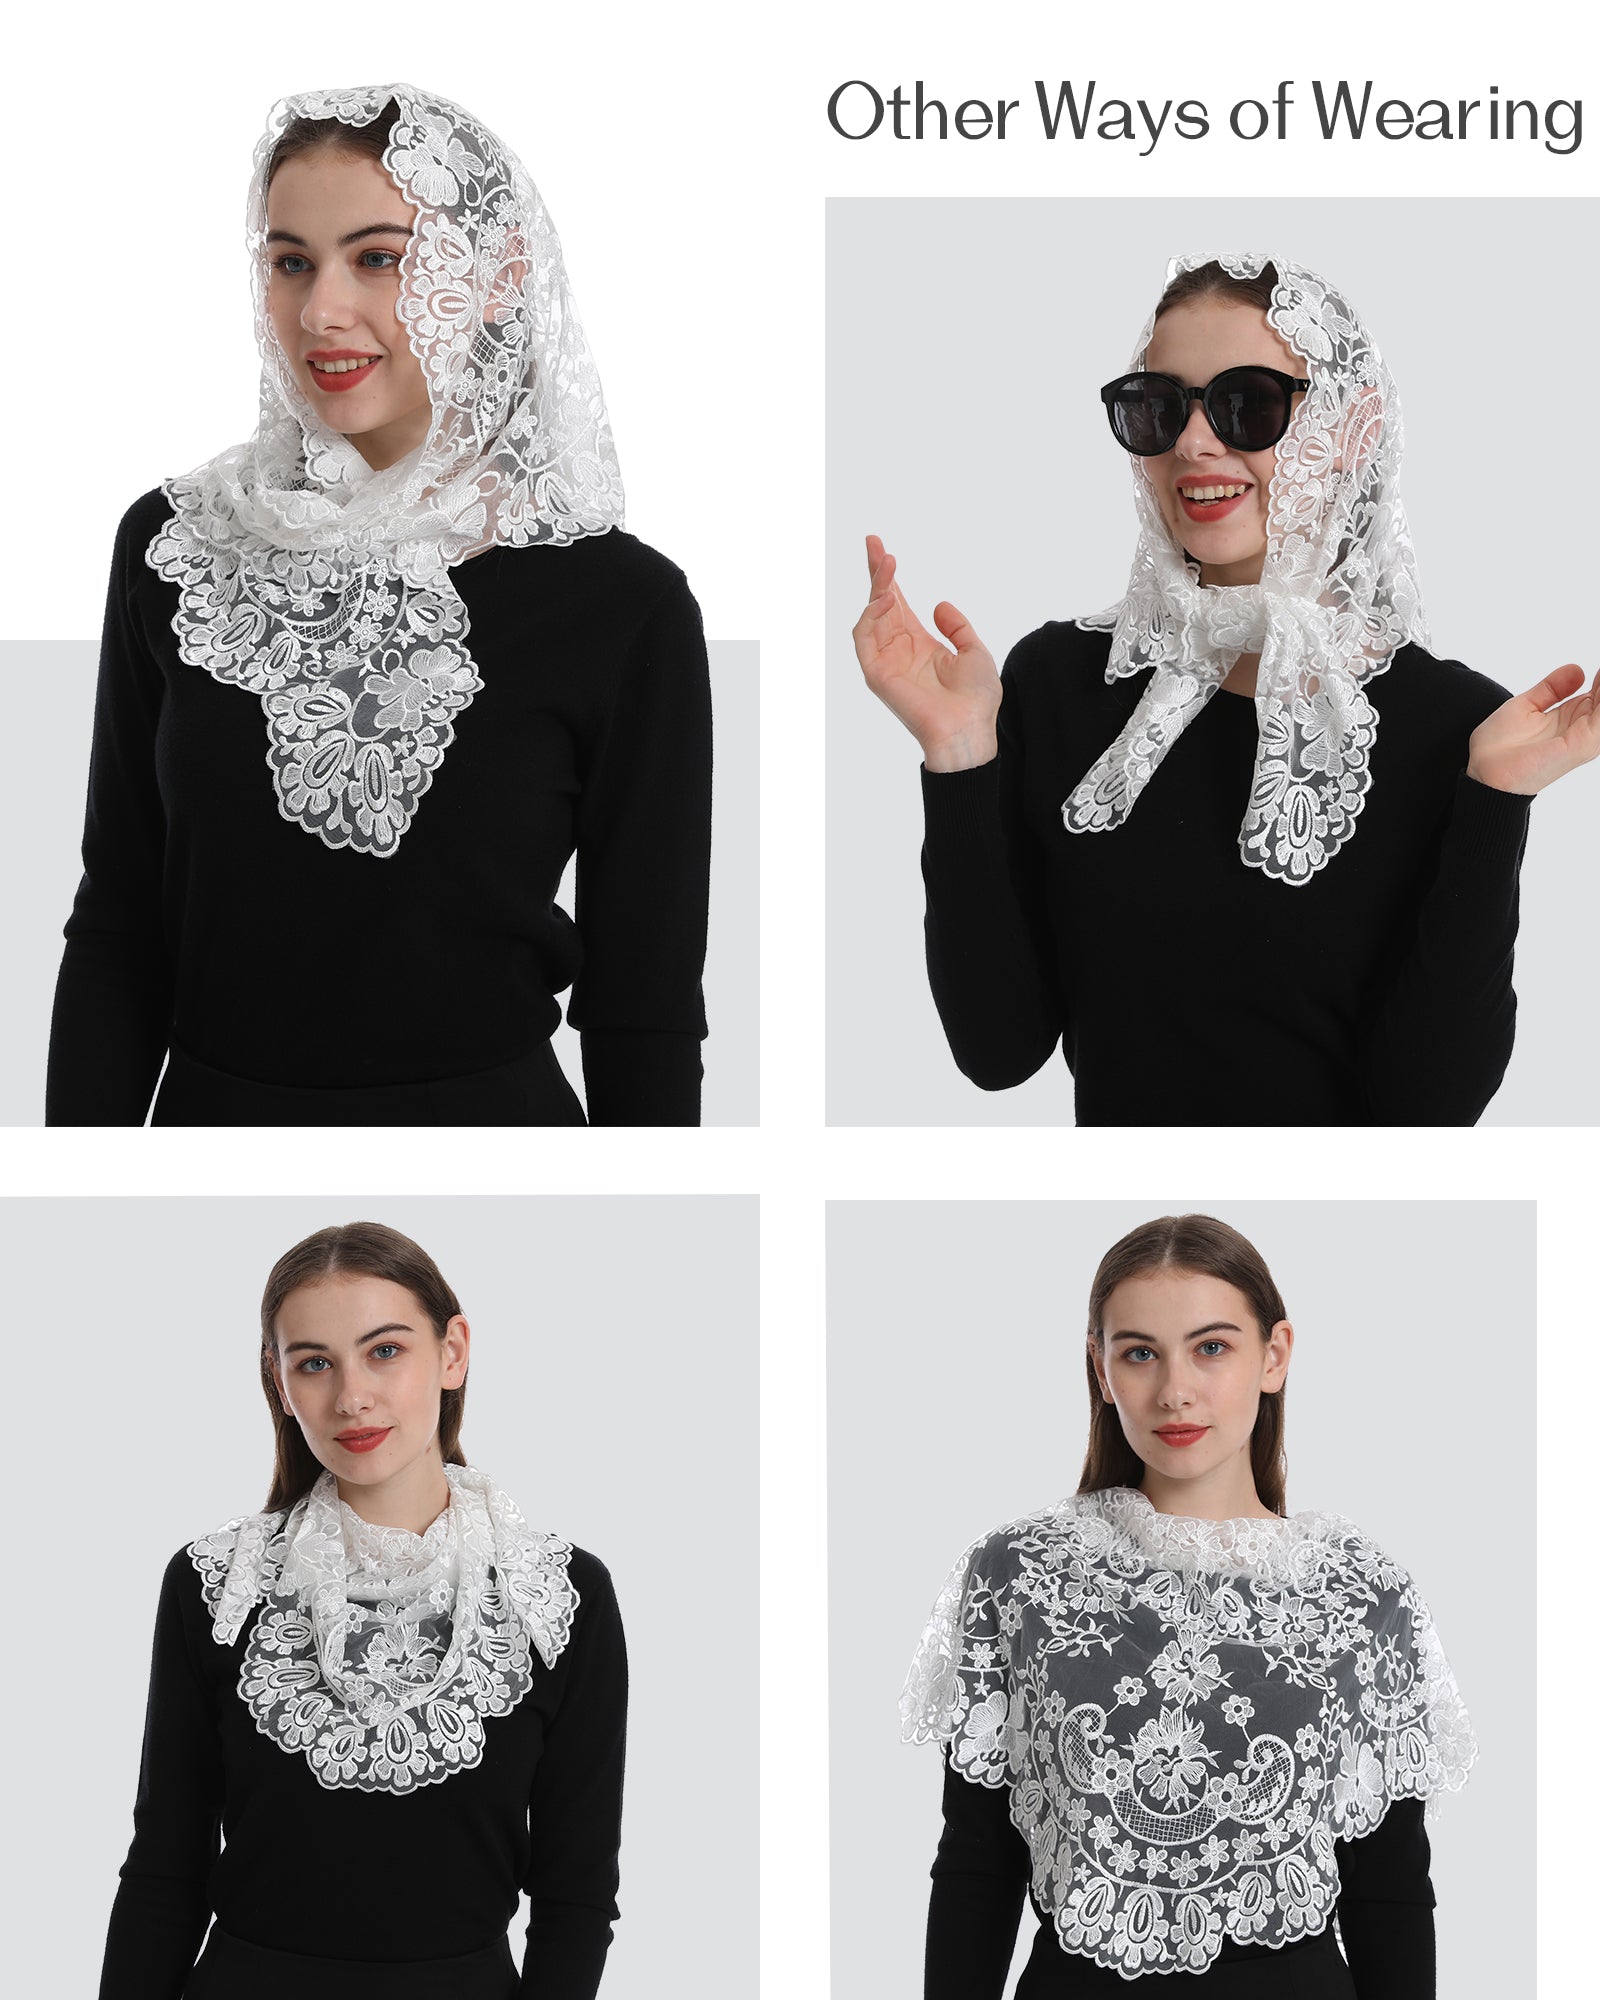 Fashion Trend Alert: Chapel Veils are Back! - PrayTellBlog